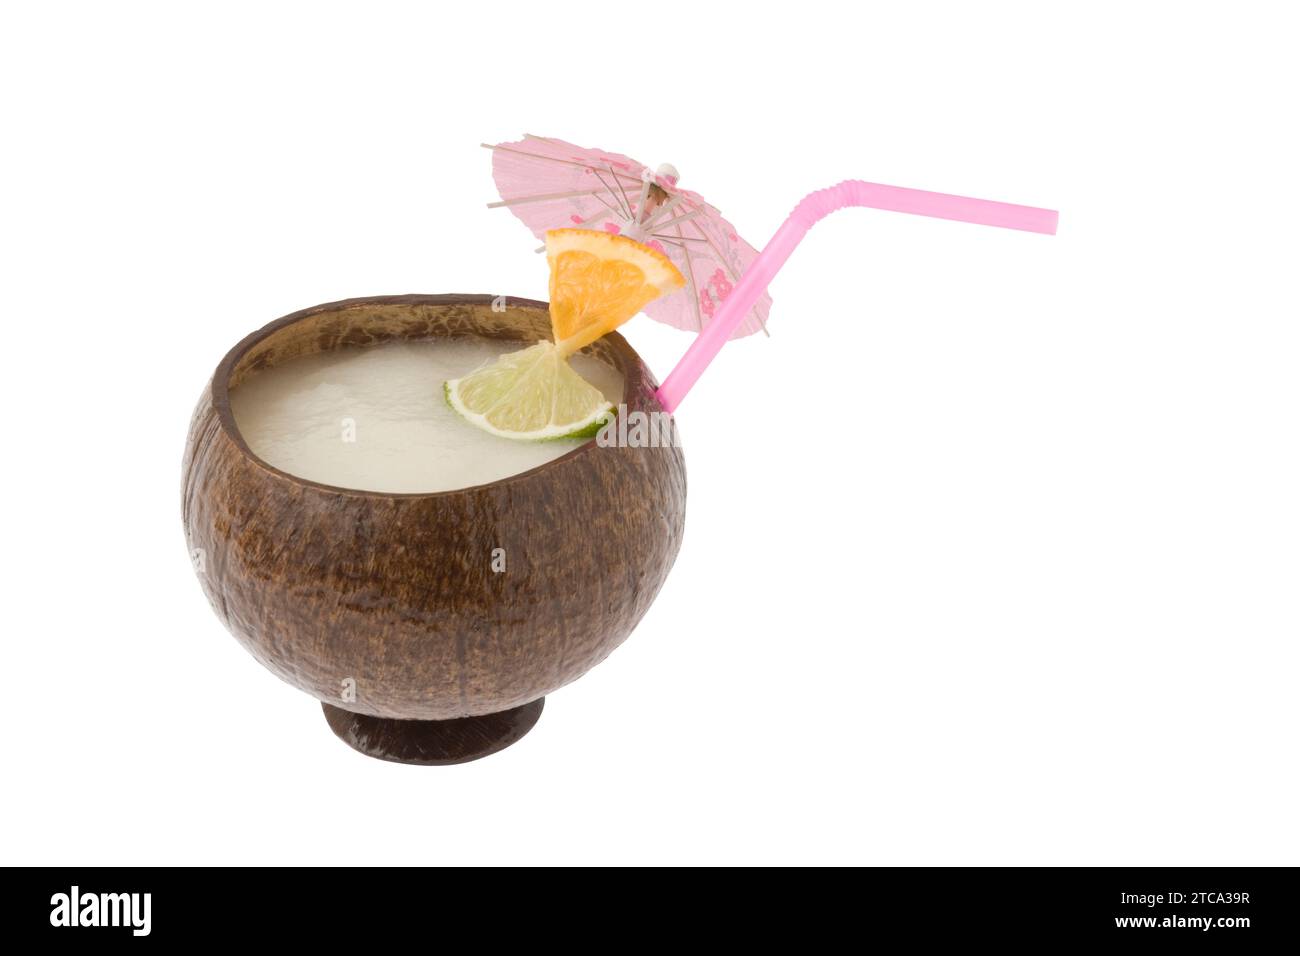 Pina Colada mixed drink with fruit garnish on white background Stock Photo